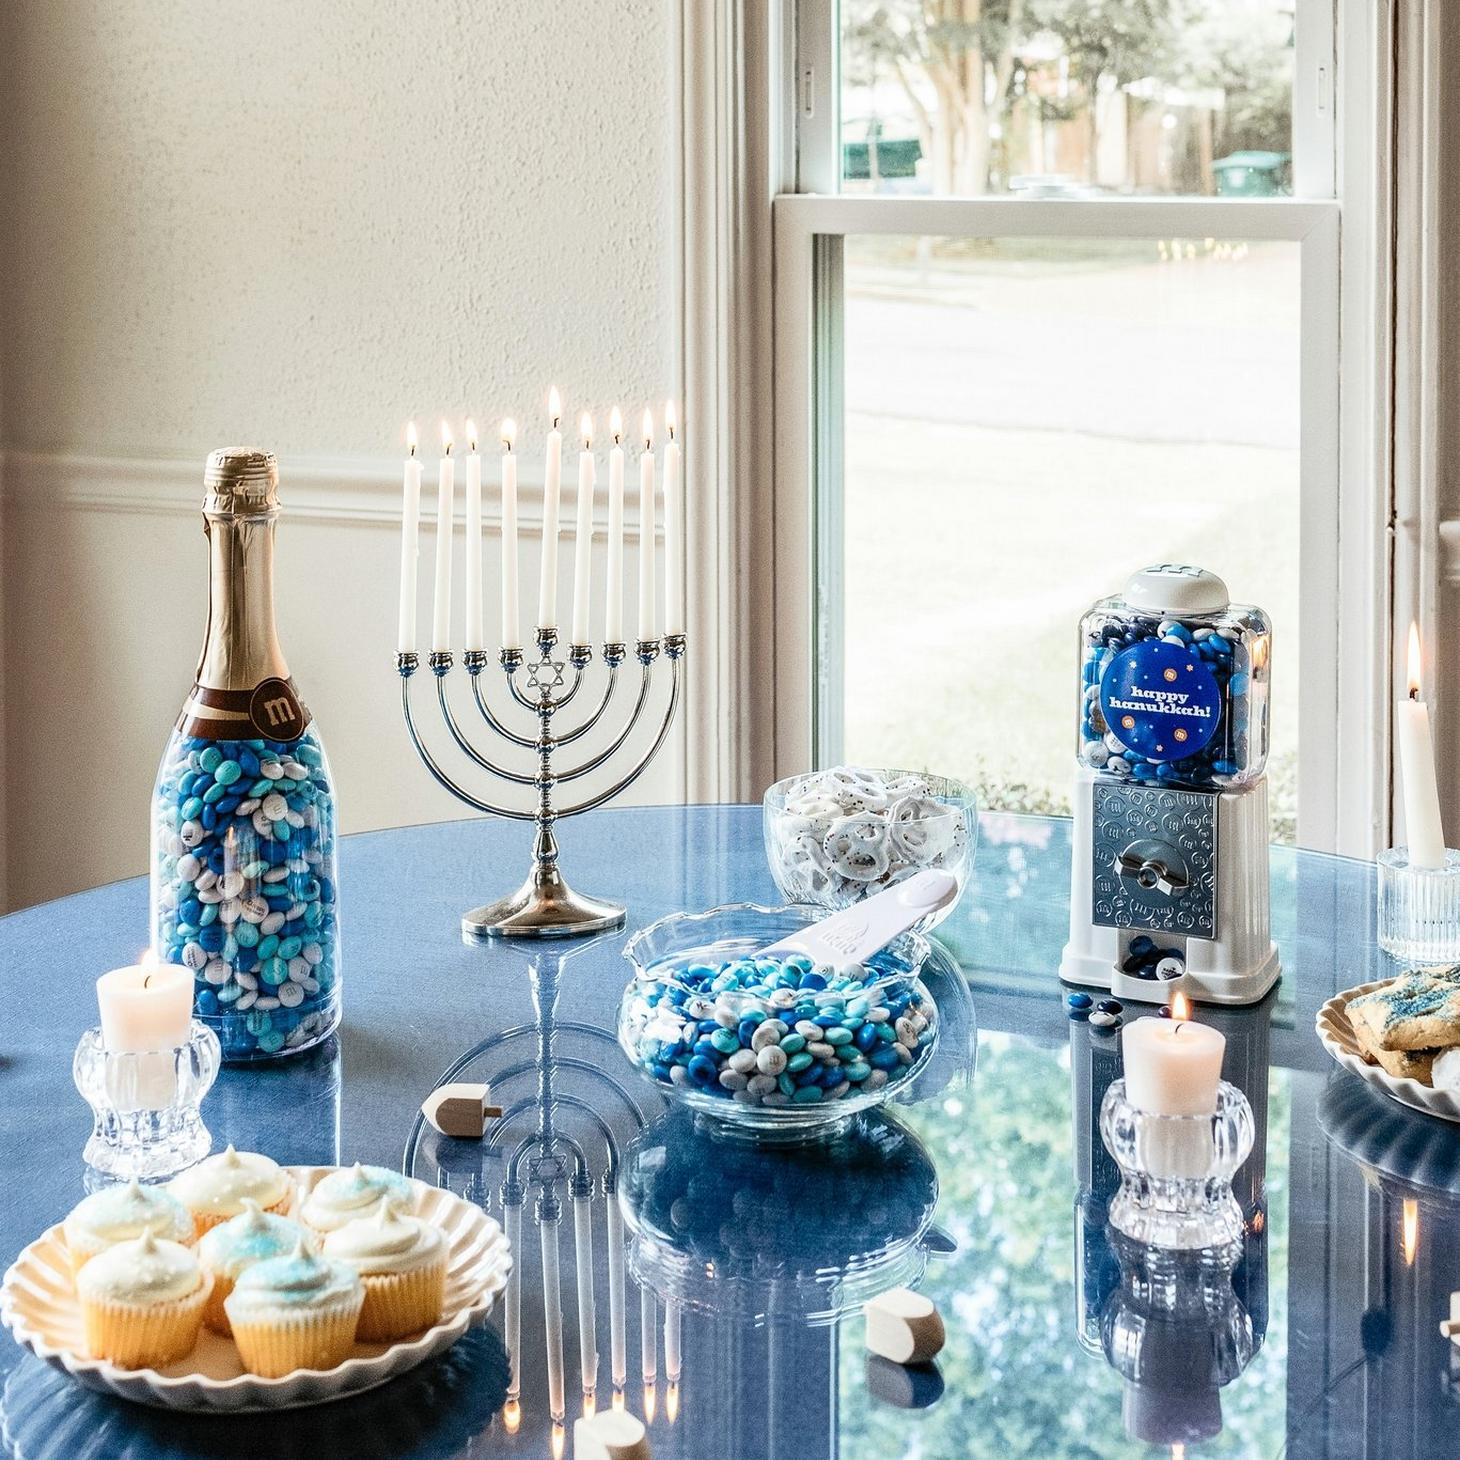 Hanukkah celebration with M&M'S